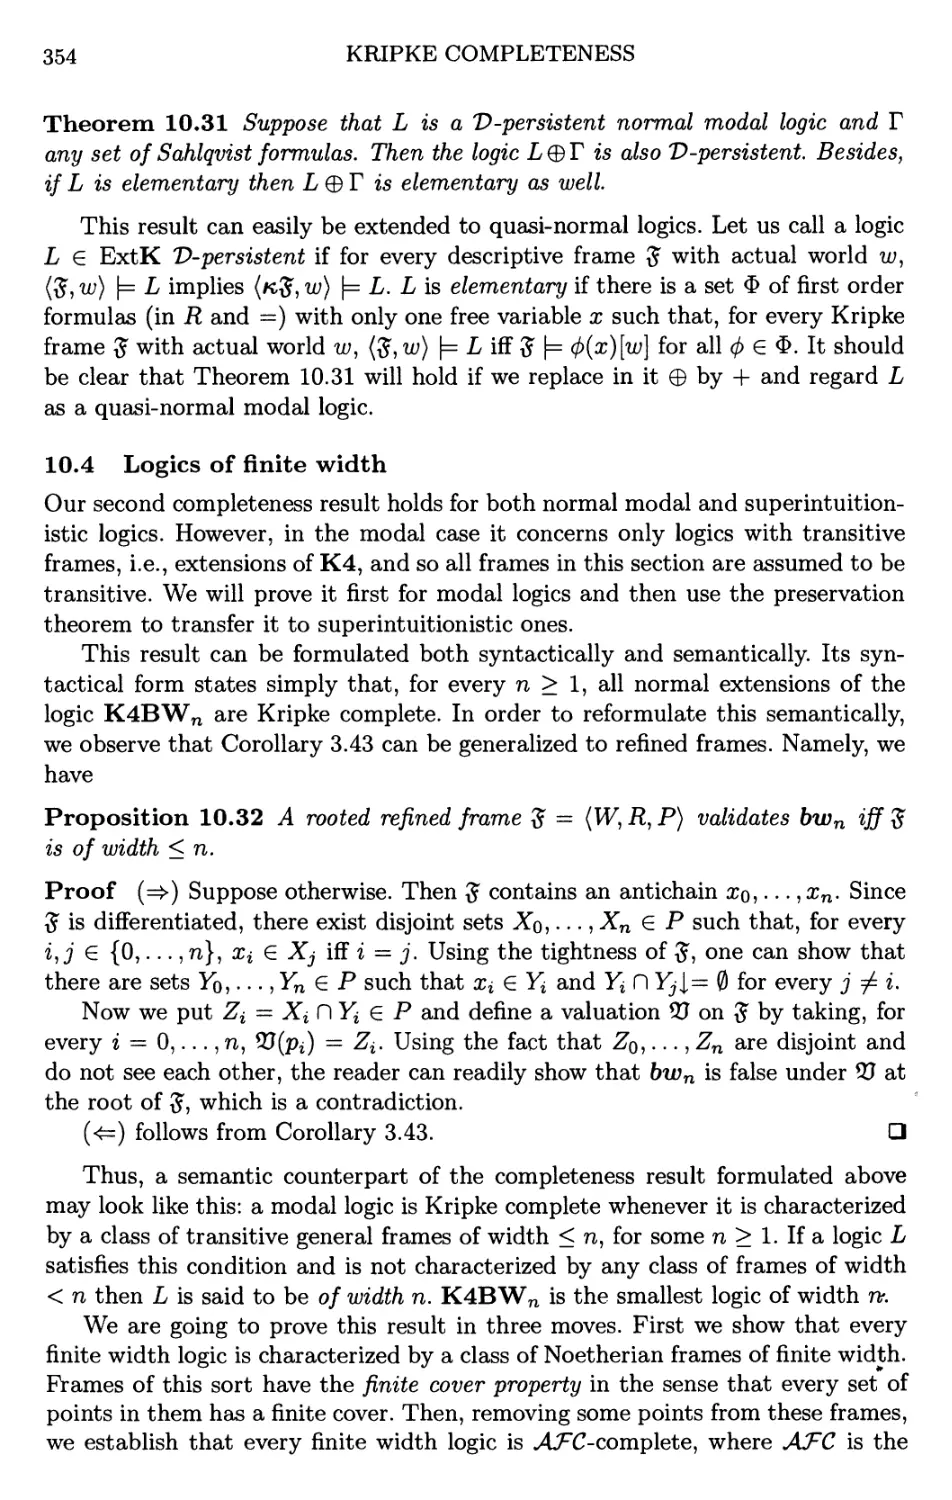 10.4 Logics of finite width